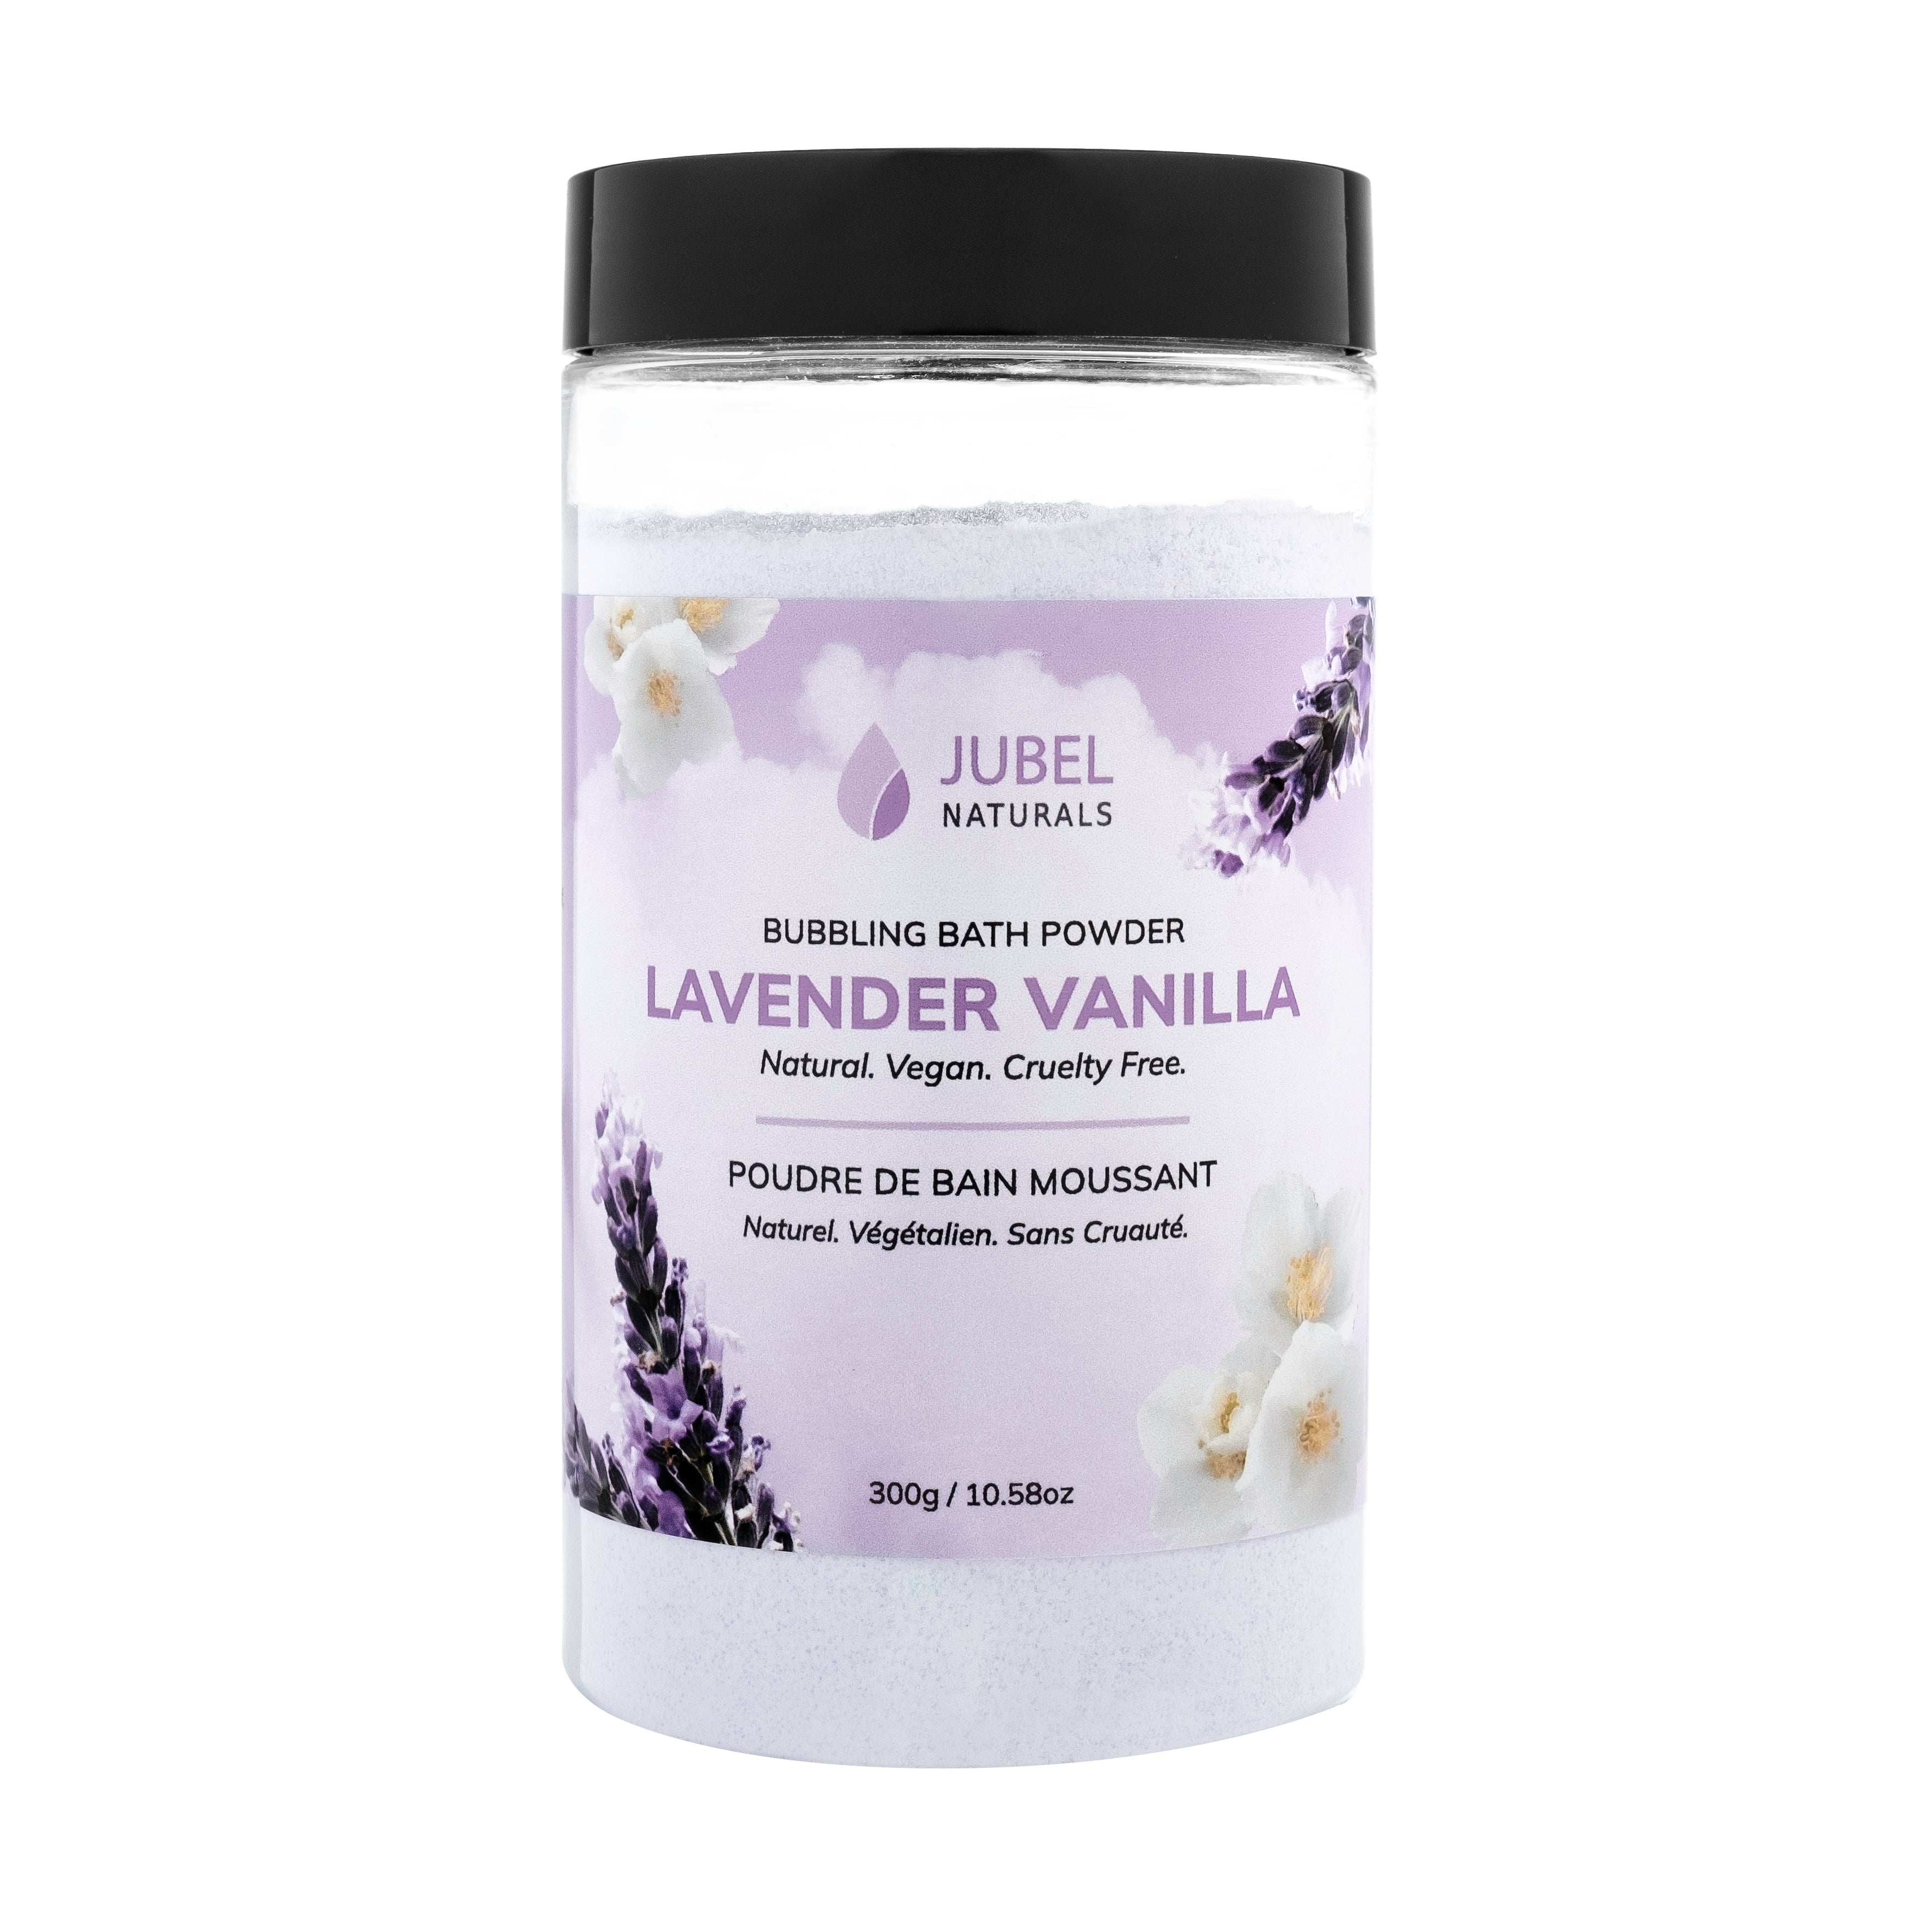 Lavender Vanilla Bubble Bath Powder